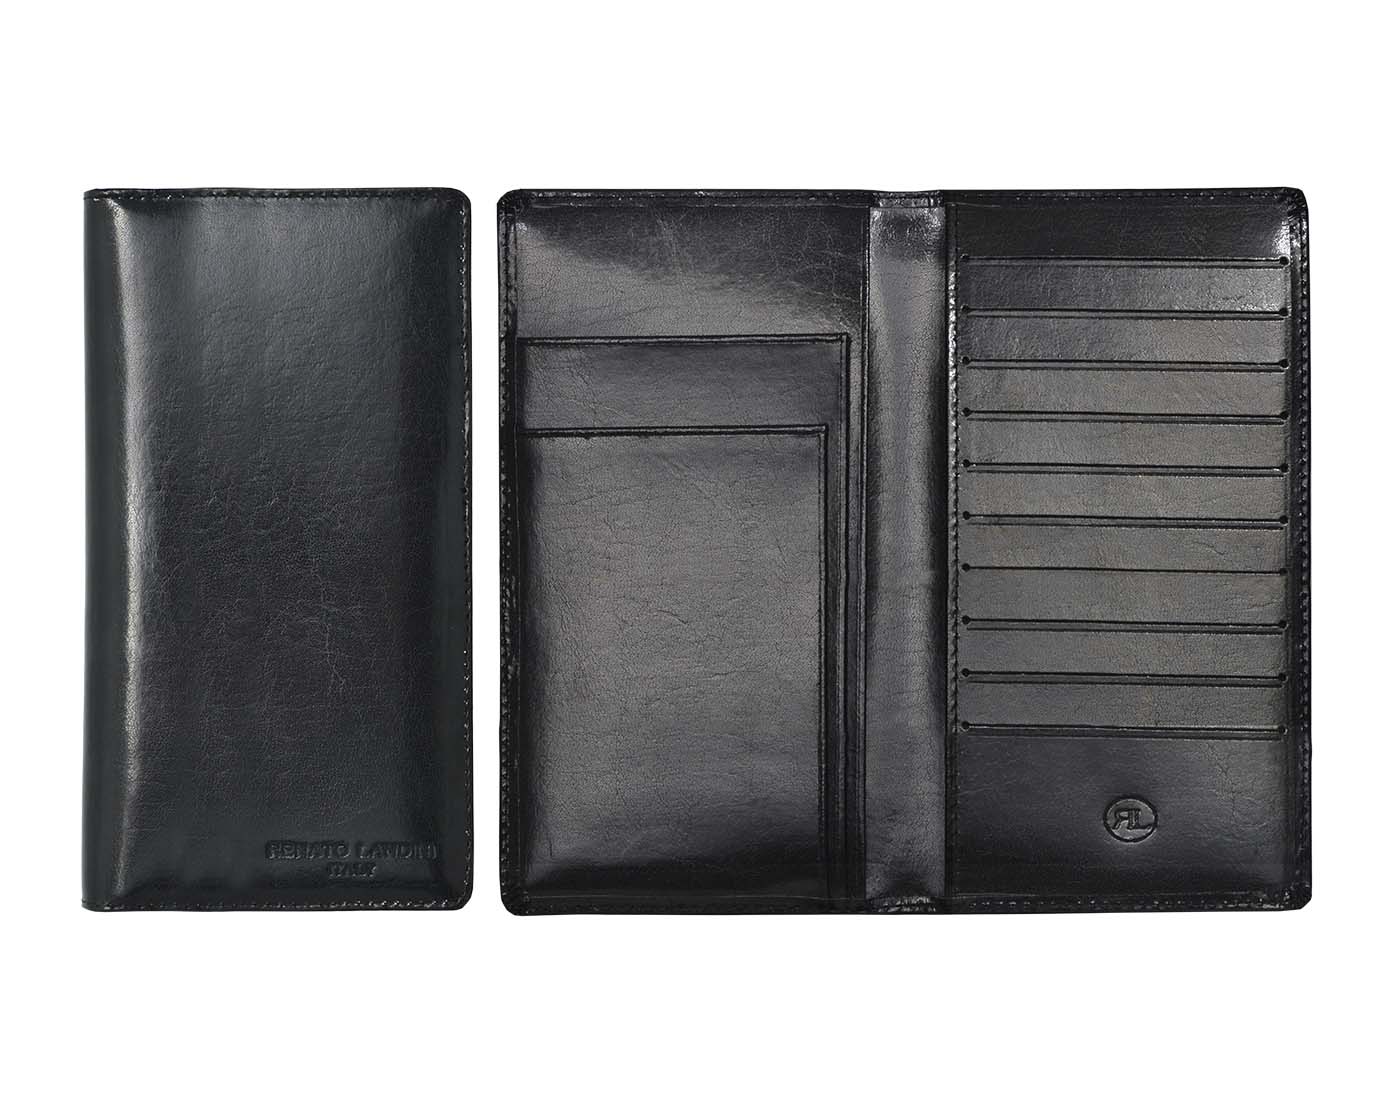 RENATO LANDINI Gift Set: Black Leather Bag + Pen + Men's Wallet + Travel Wallet + Key Holder